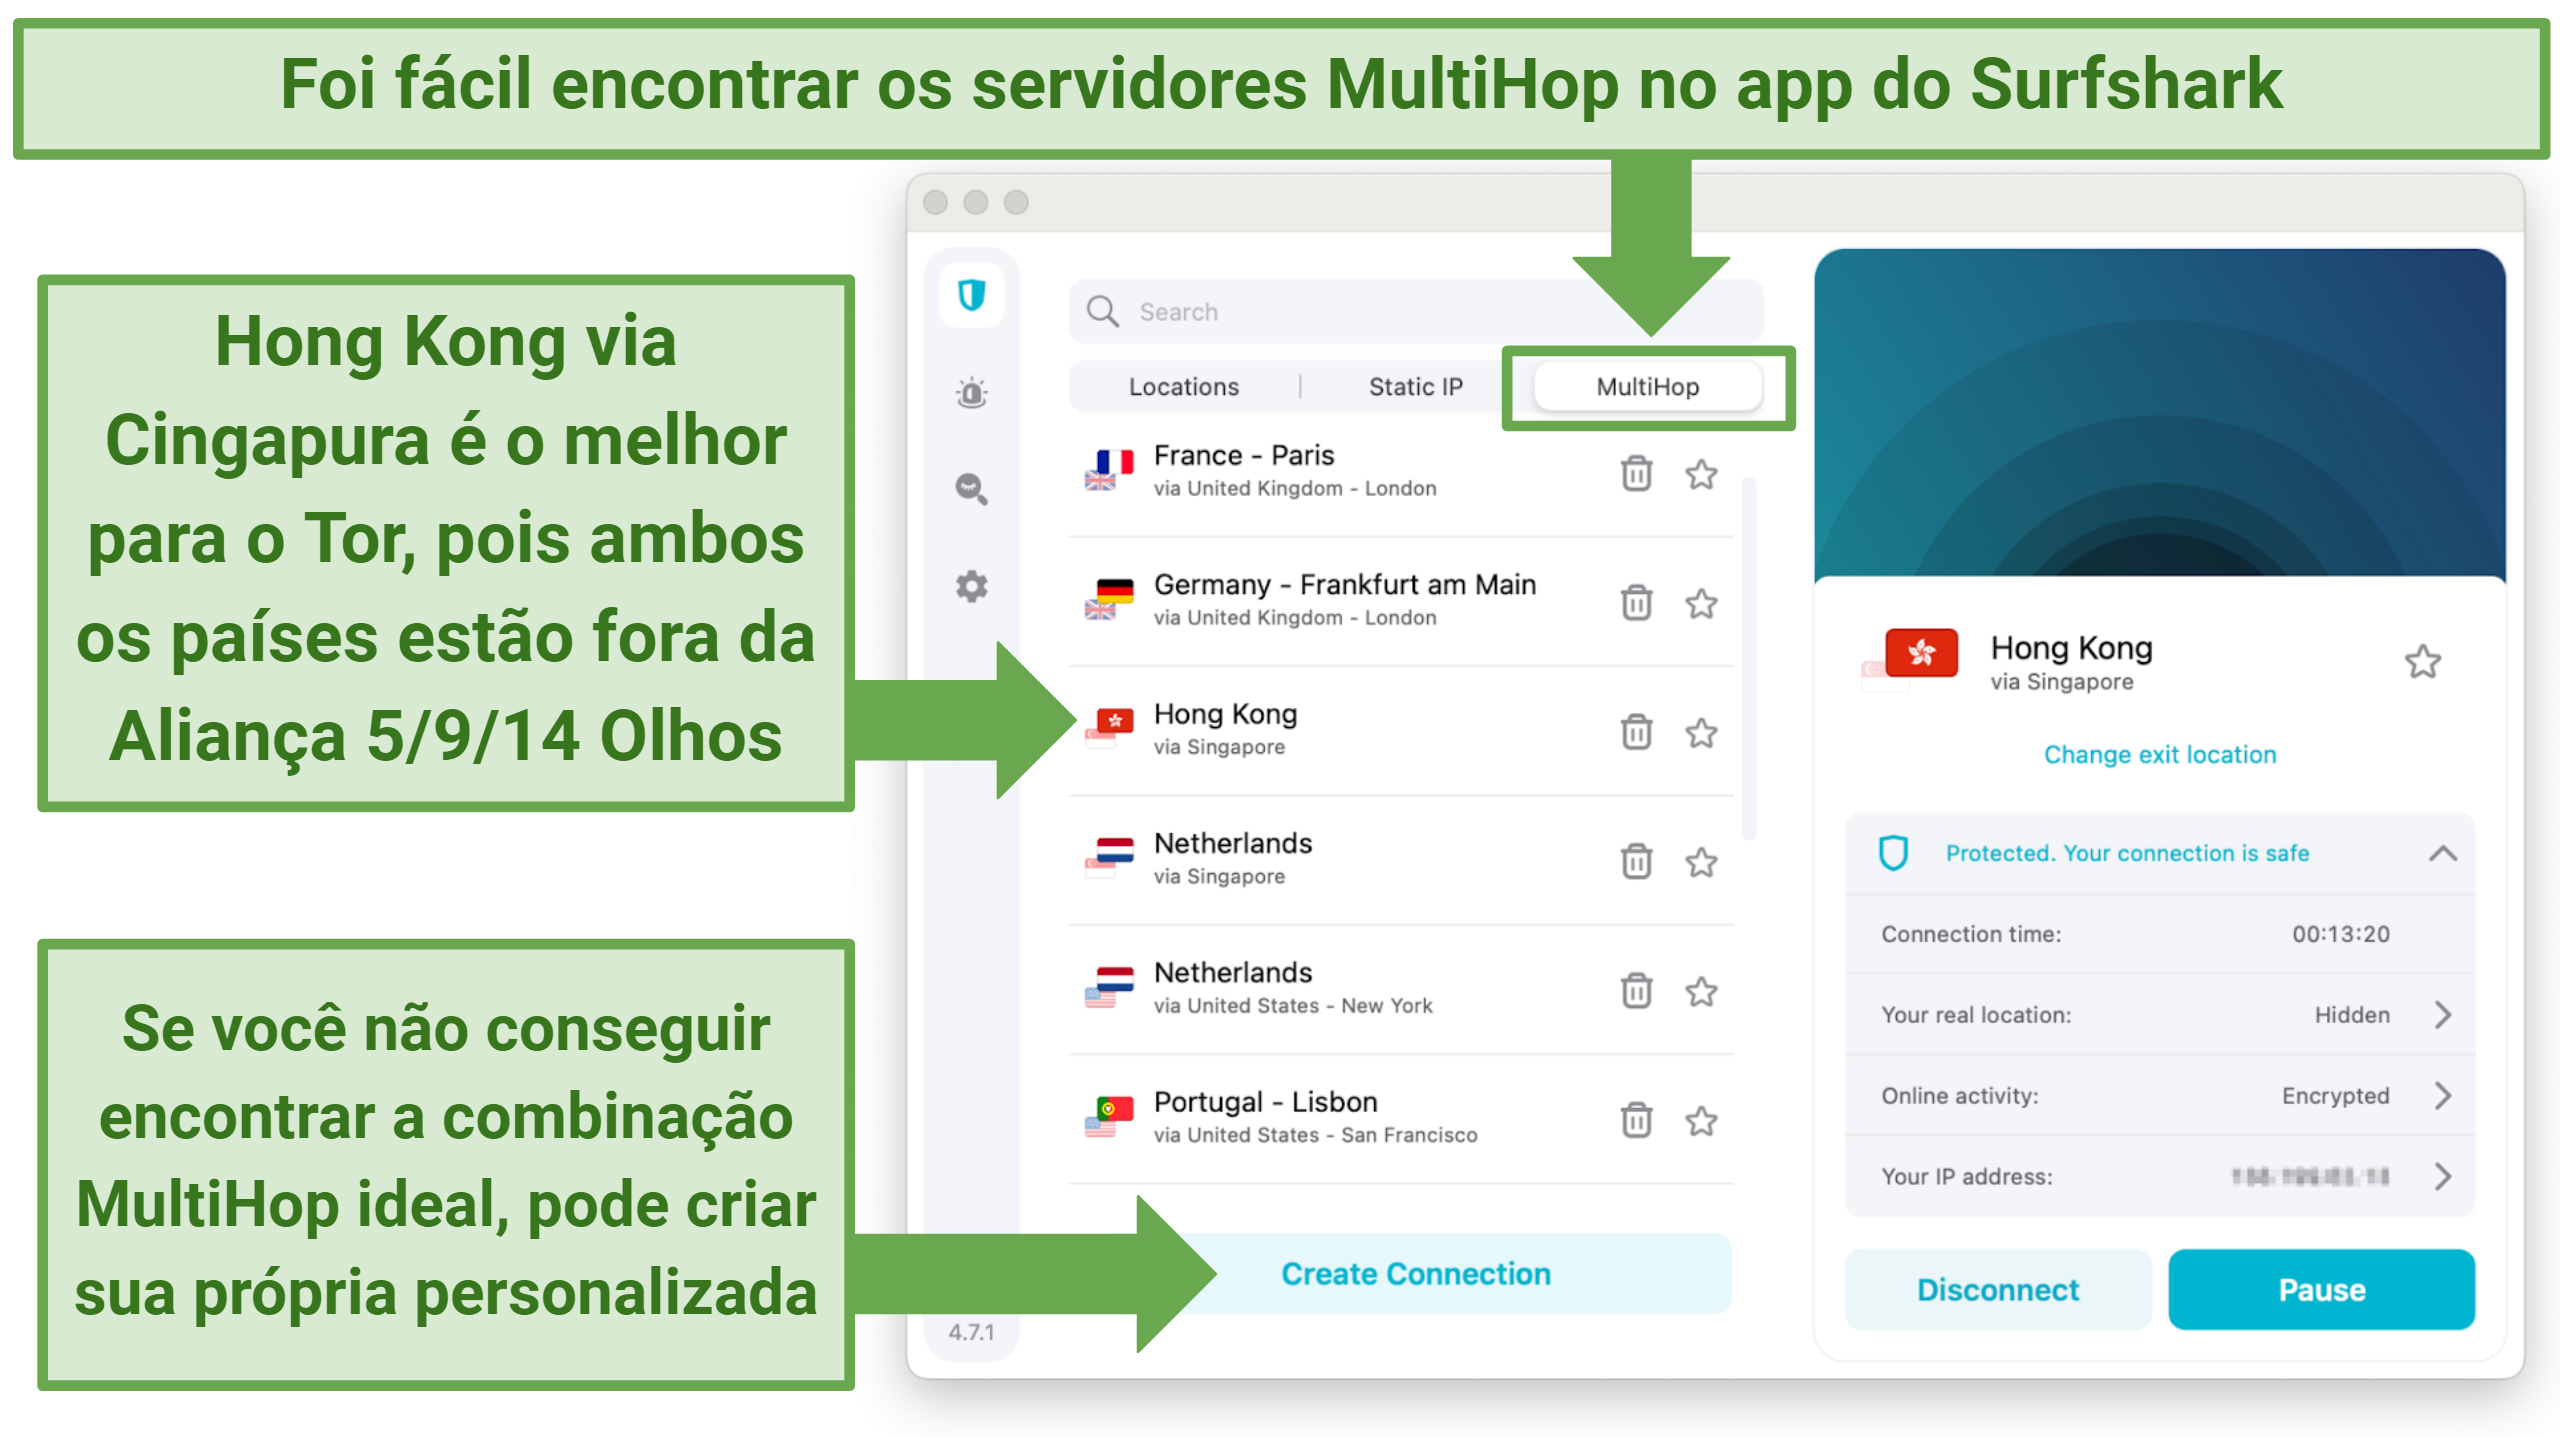 Imagem mostrando o app Surfshark com servidores double-VPN MultiHop